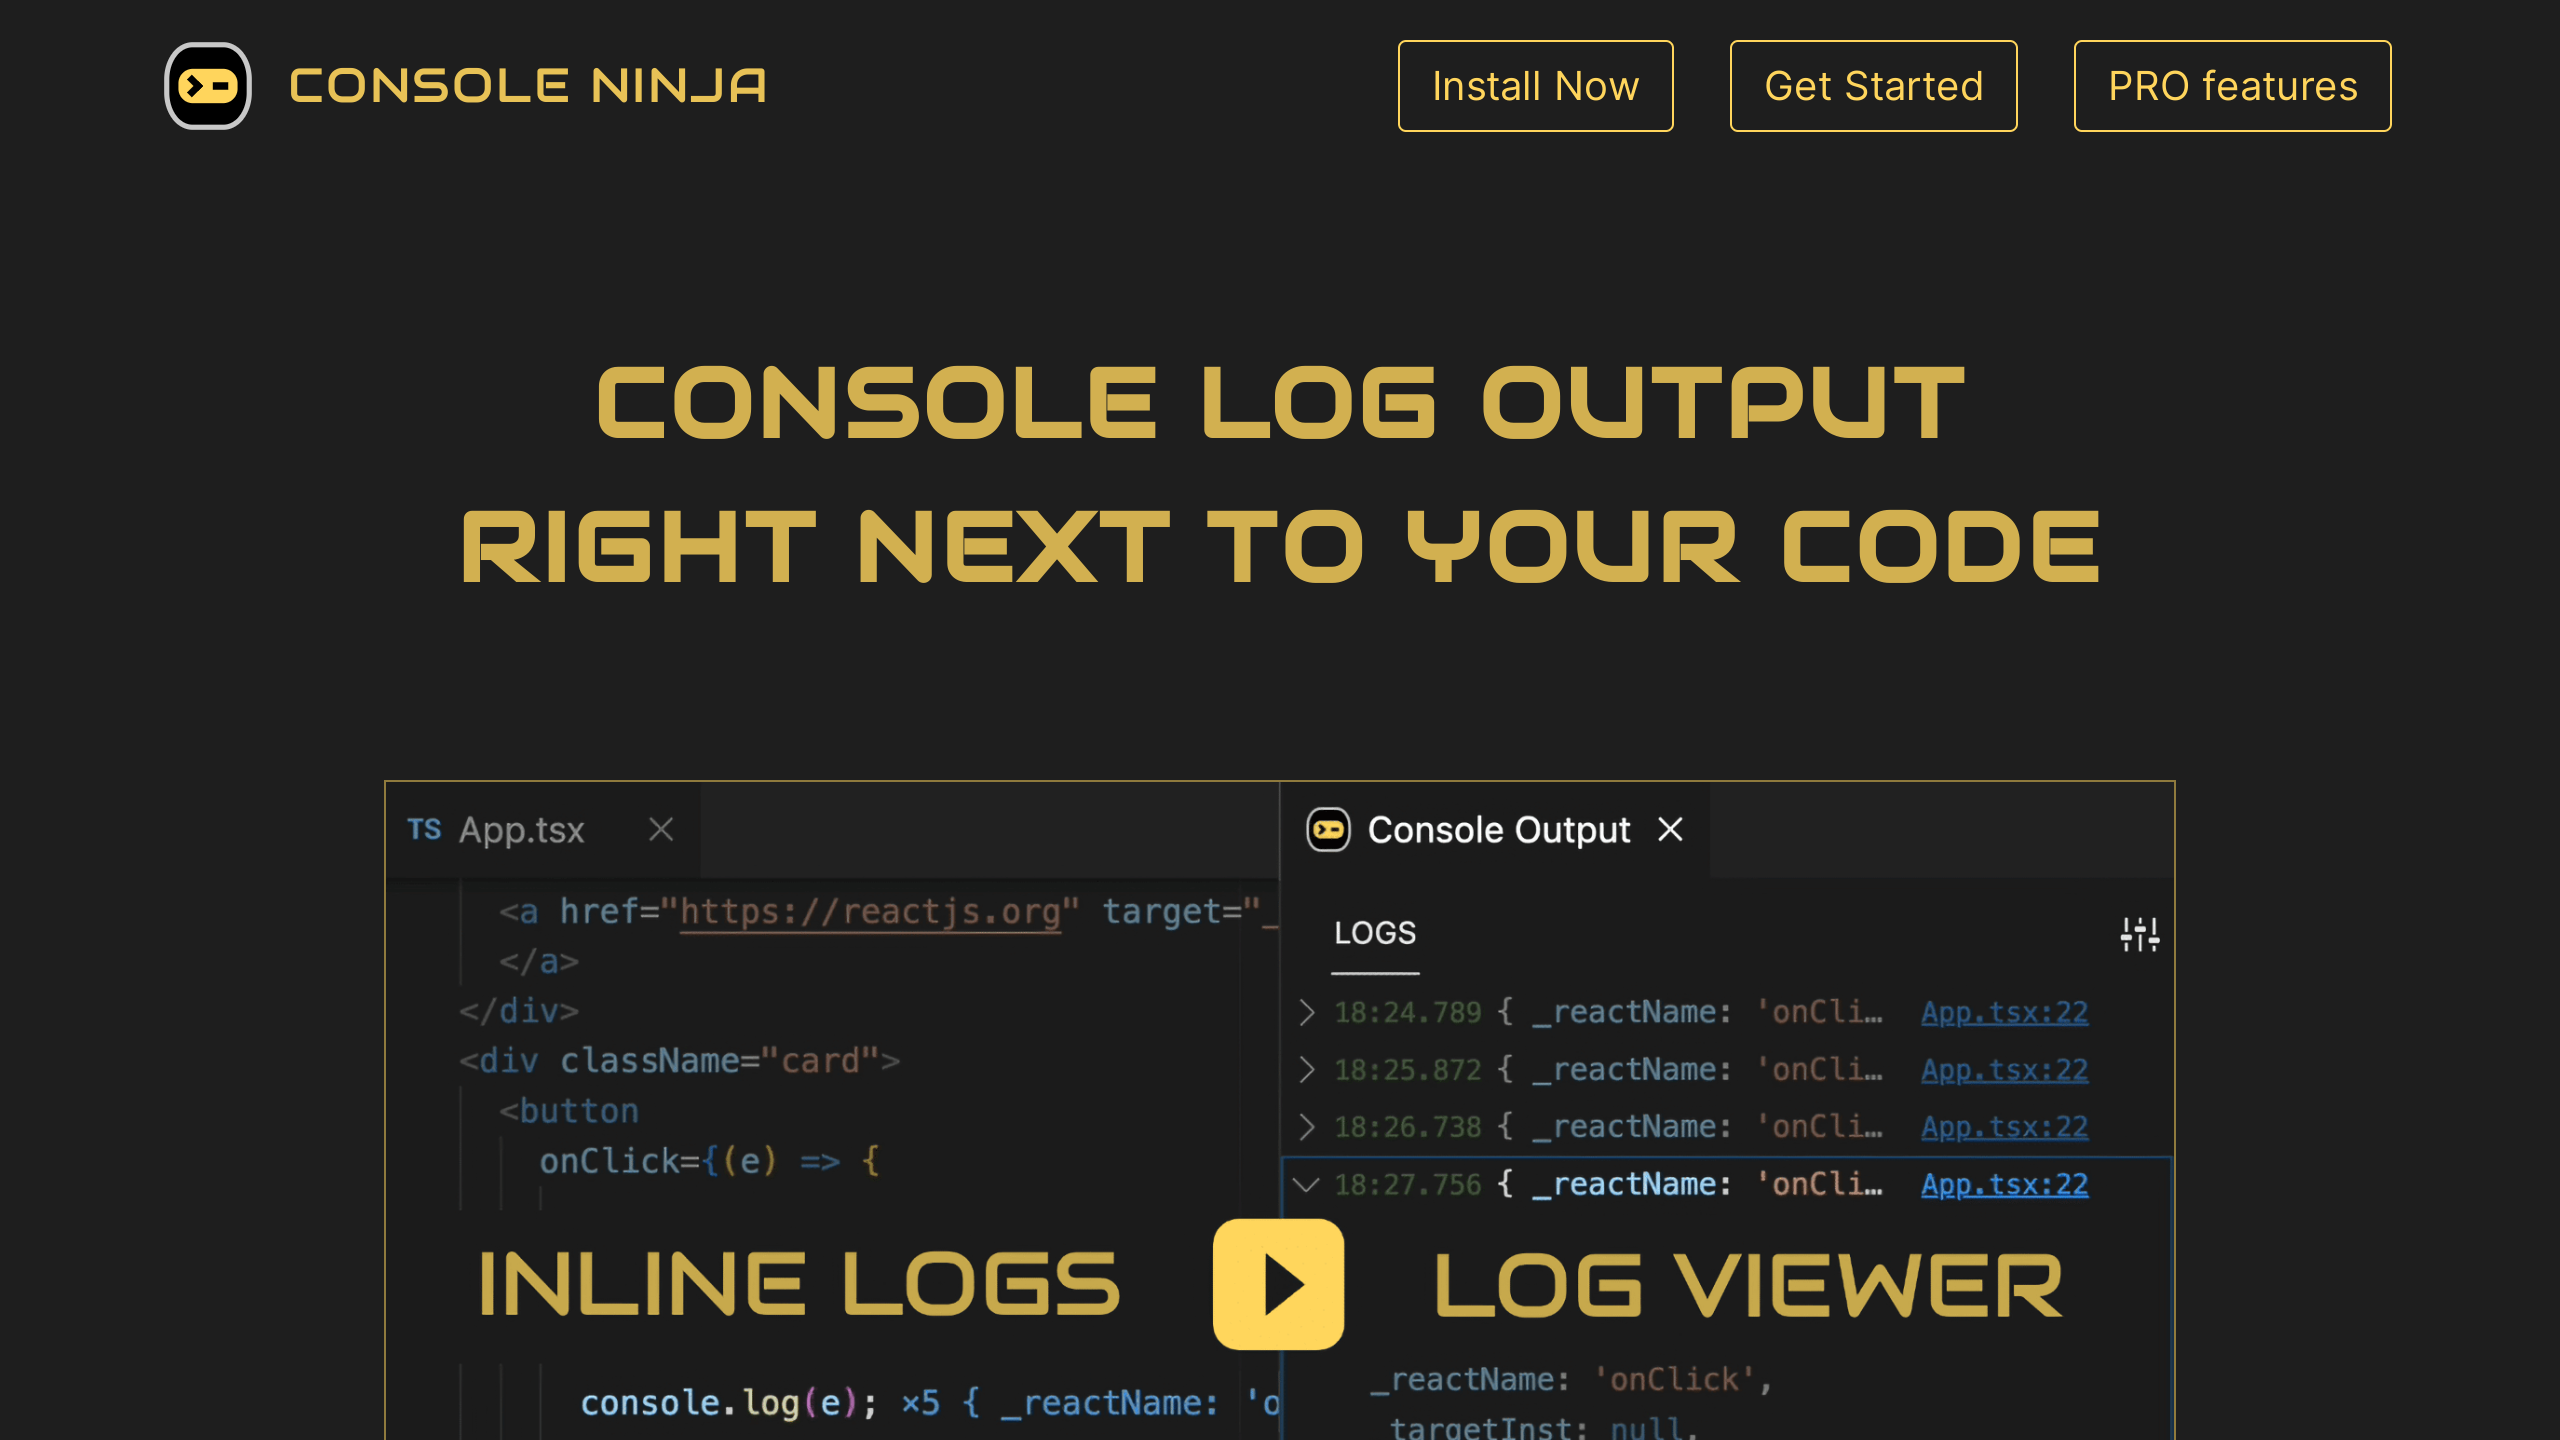 Console Ninja's website screenshot